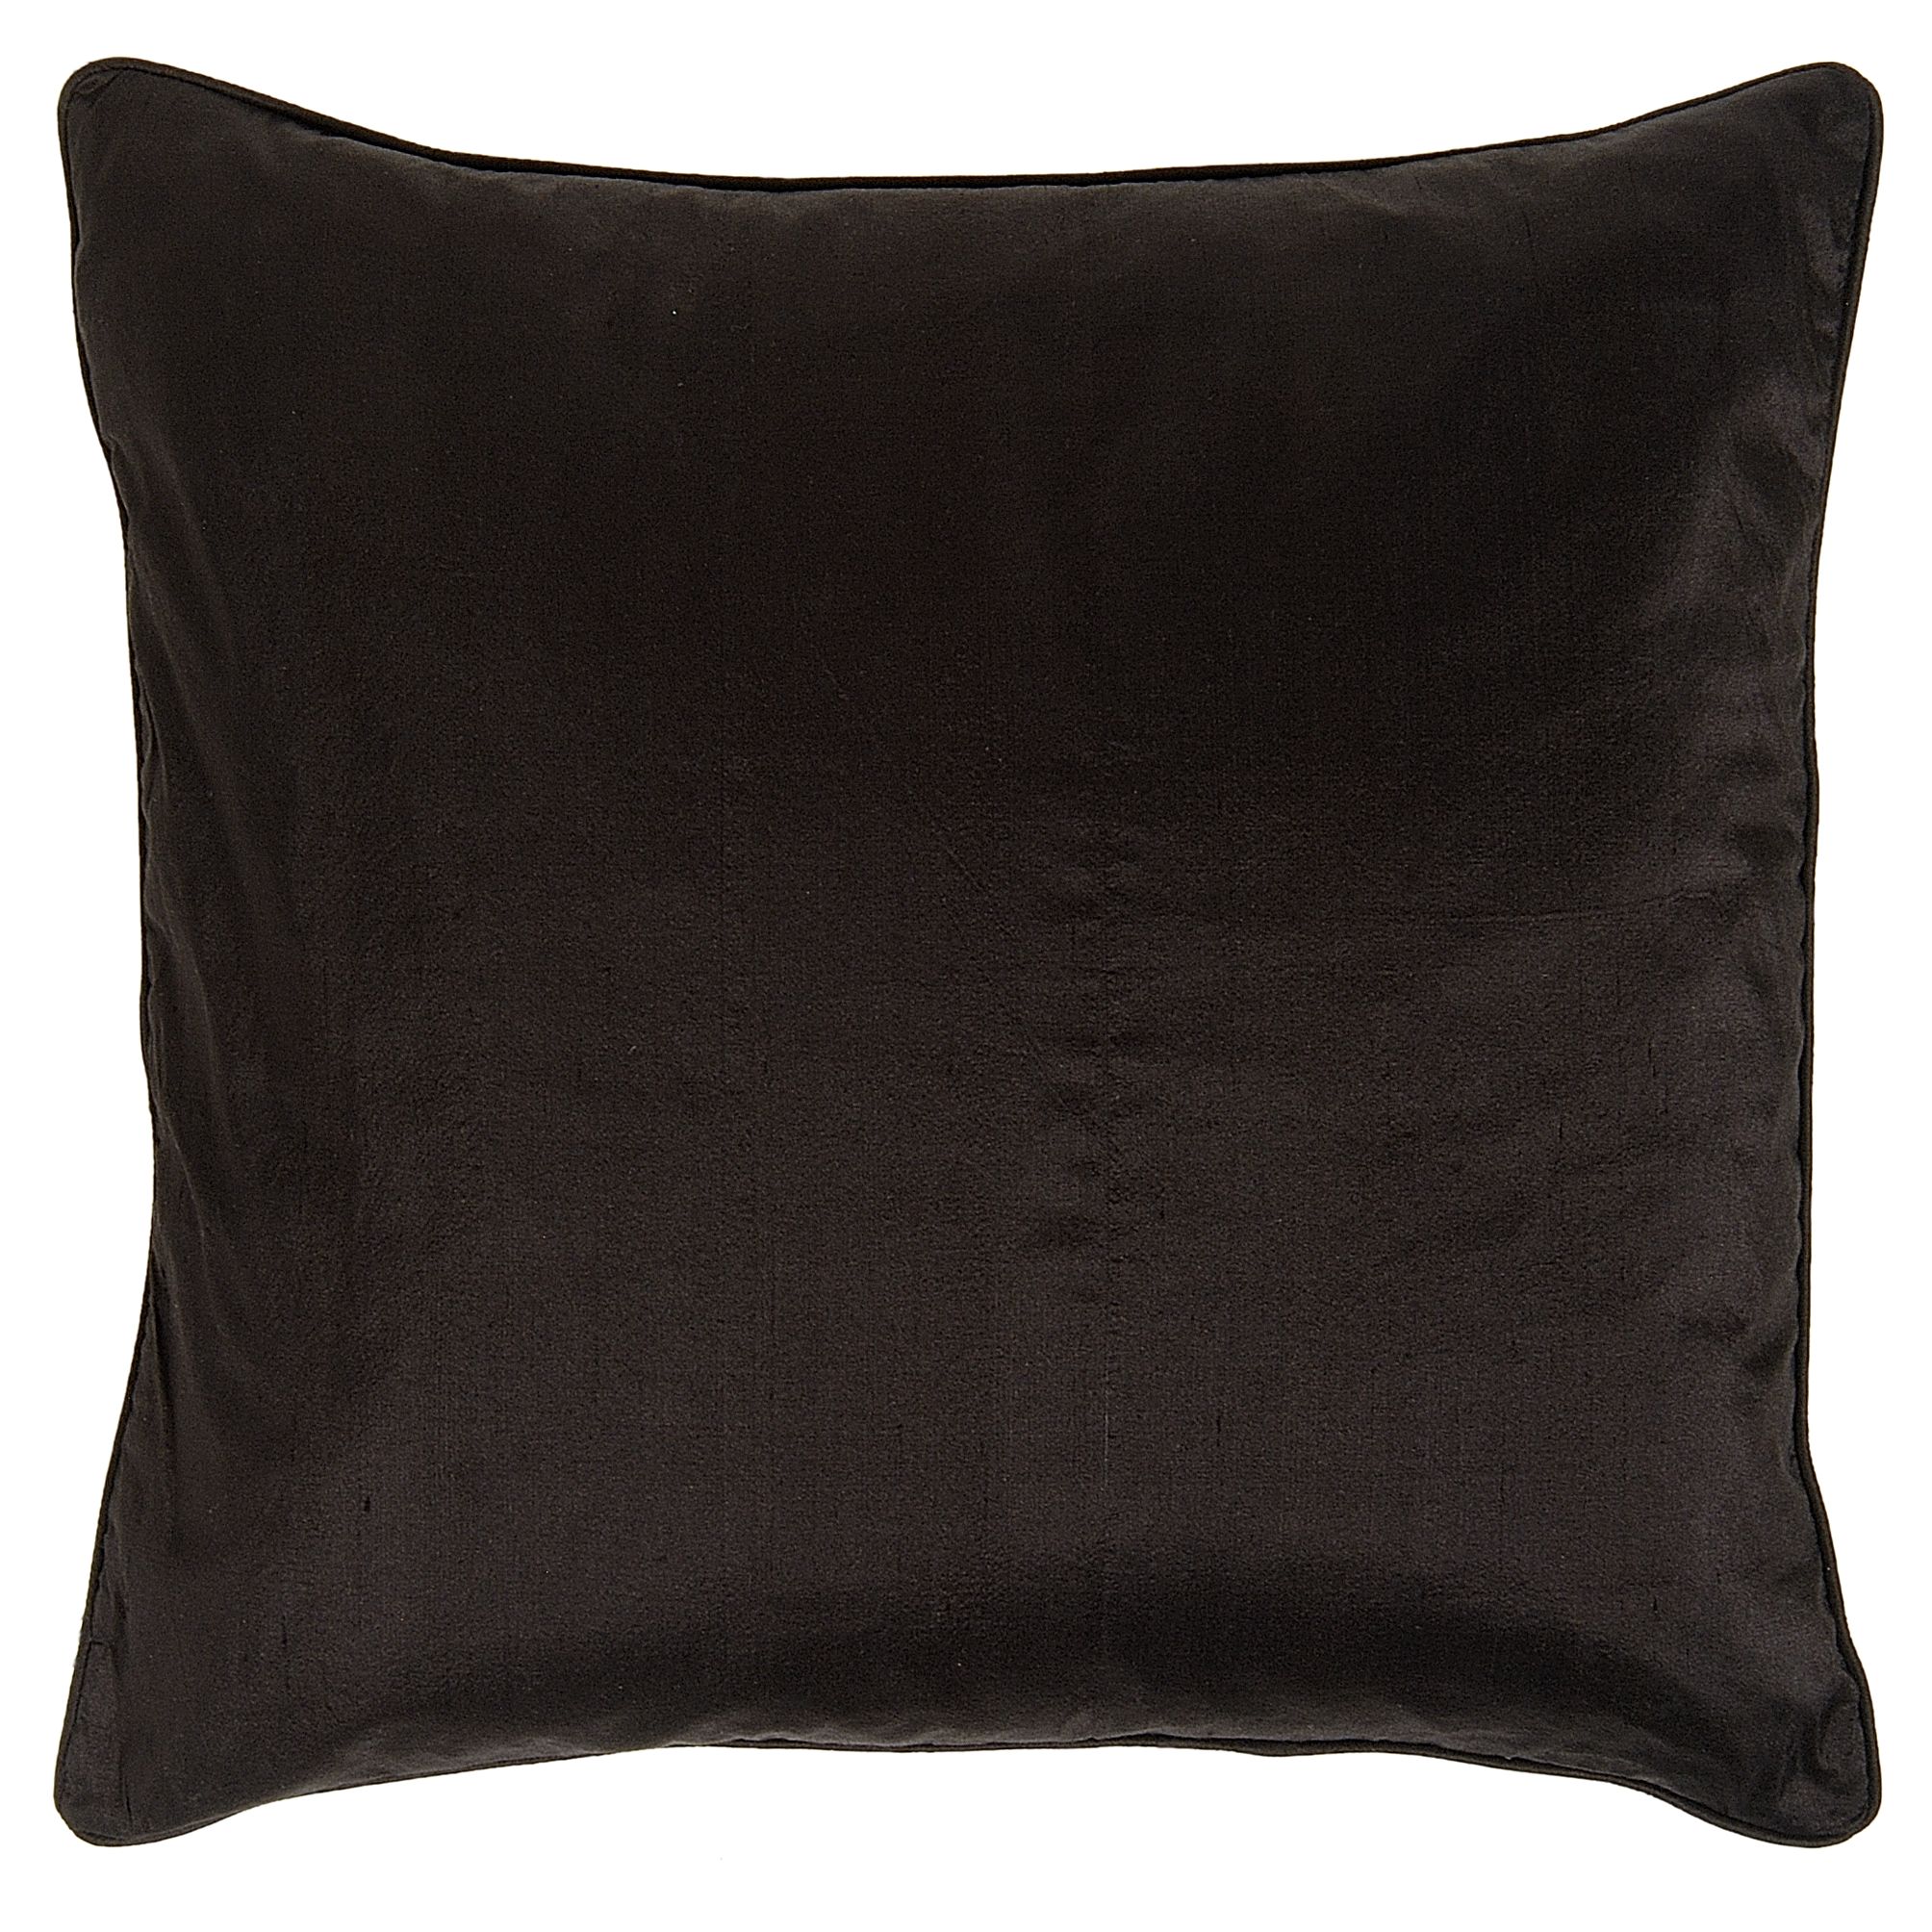 John Lewis Silk Cushion, Black, One size